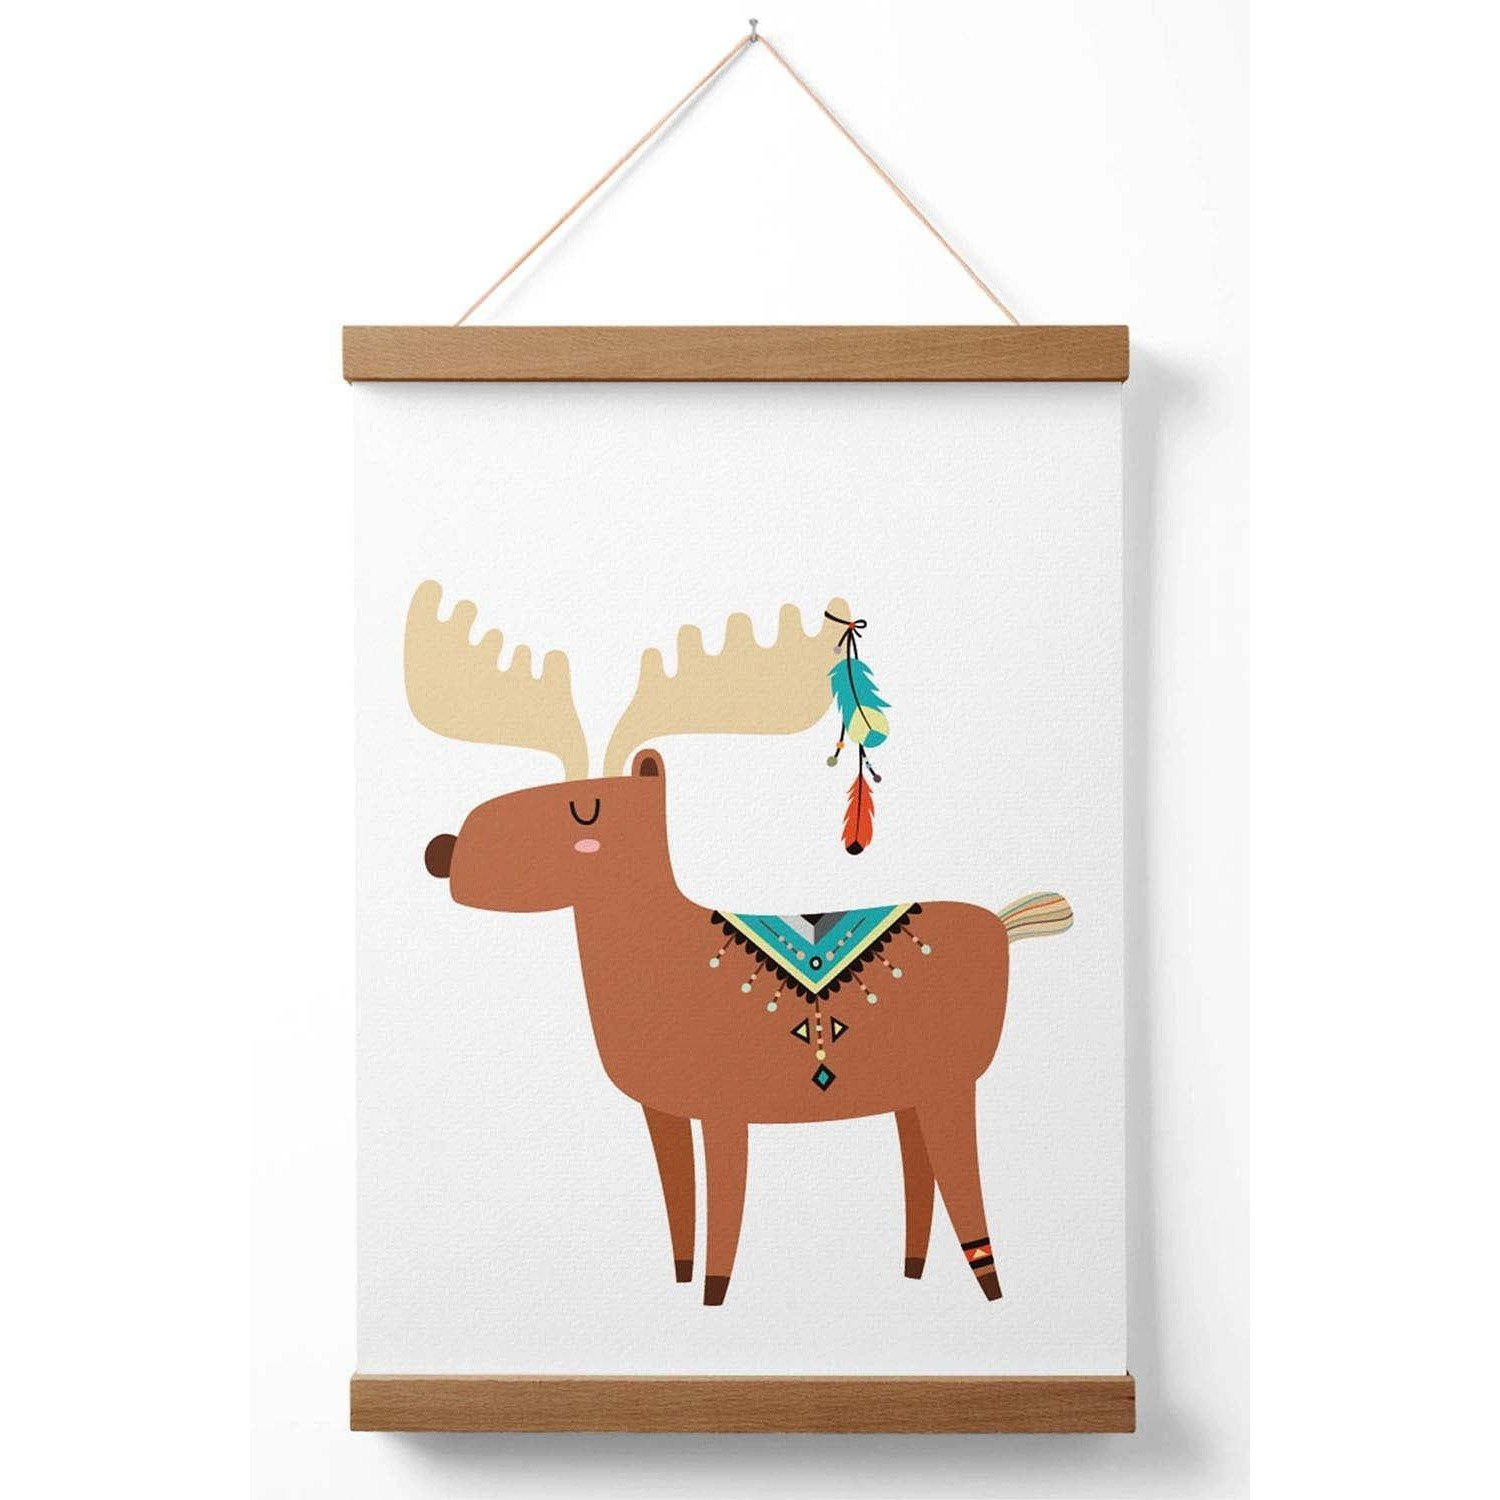 Reindeer Tribal Animal Poster with Oak Hanger - image 1